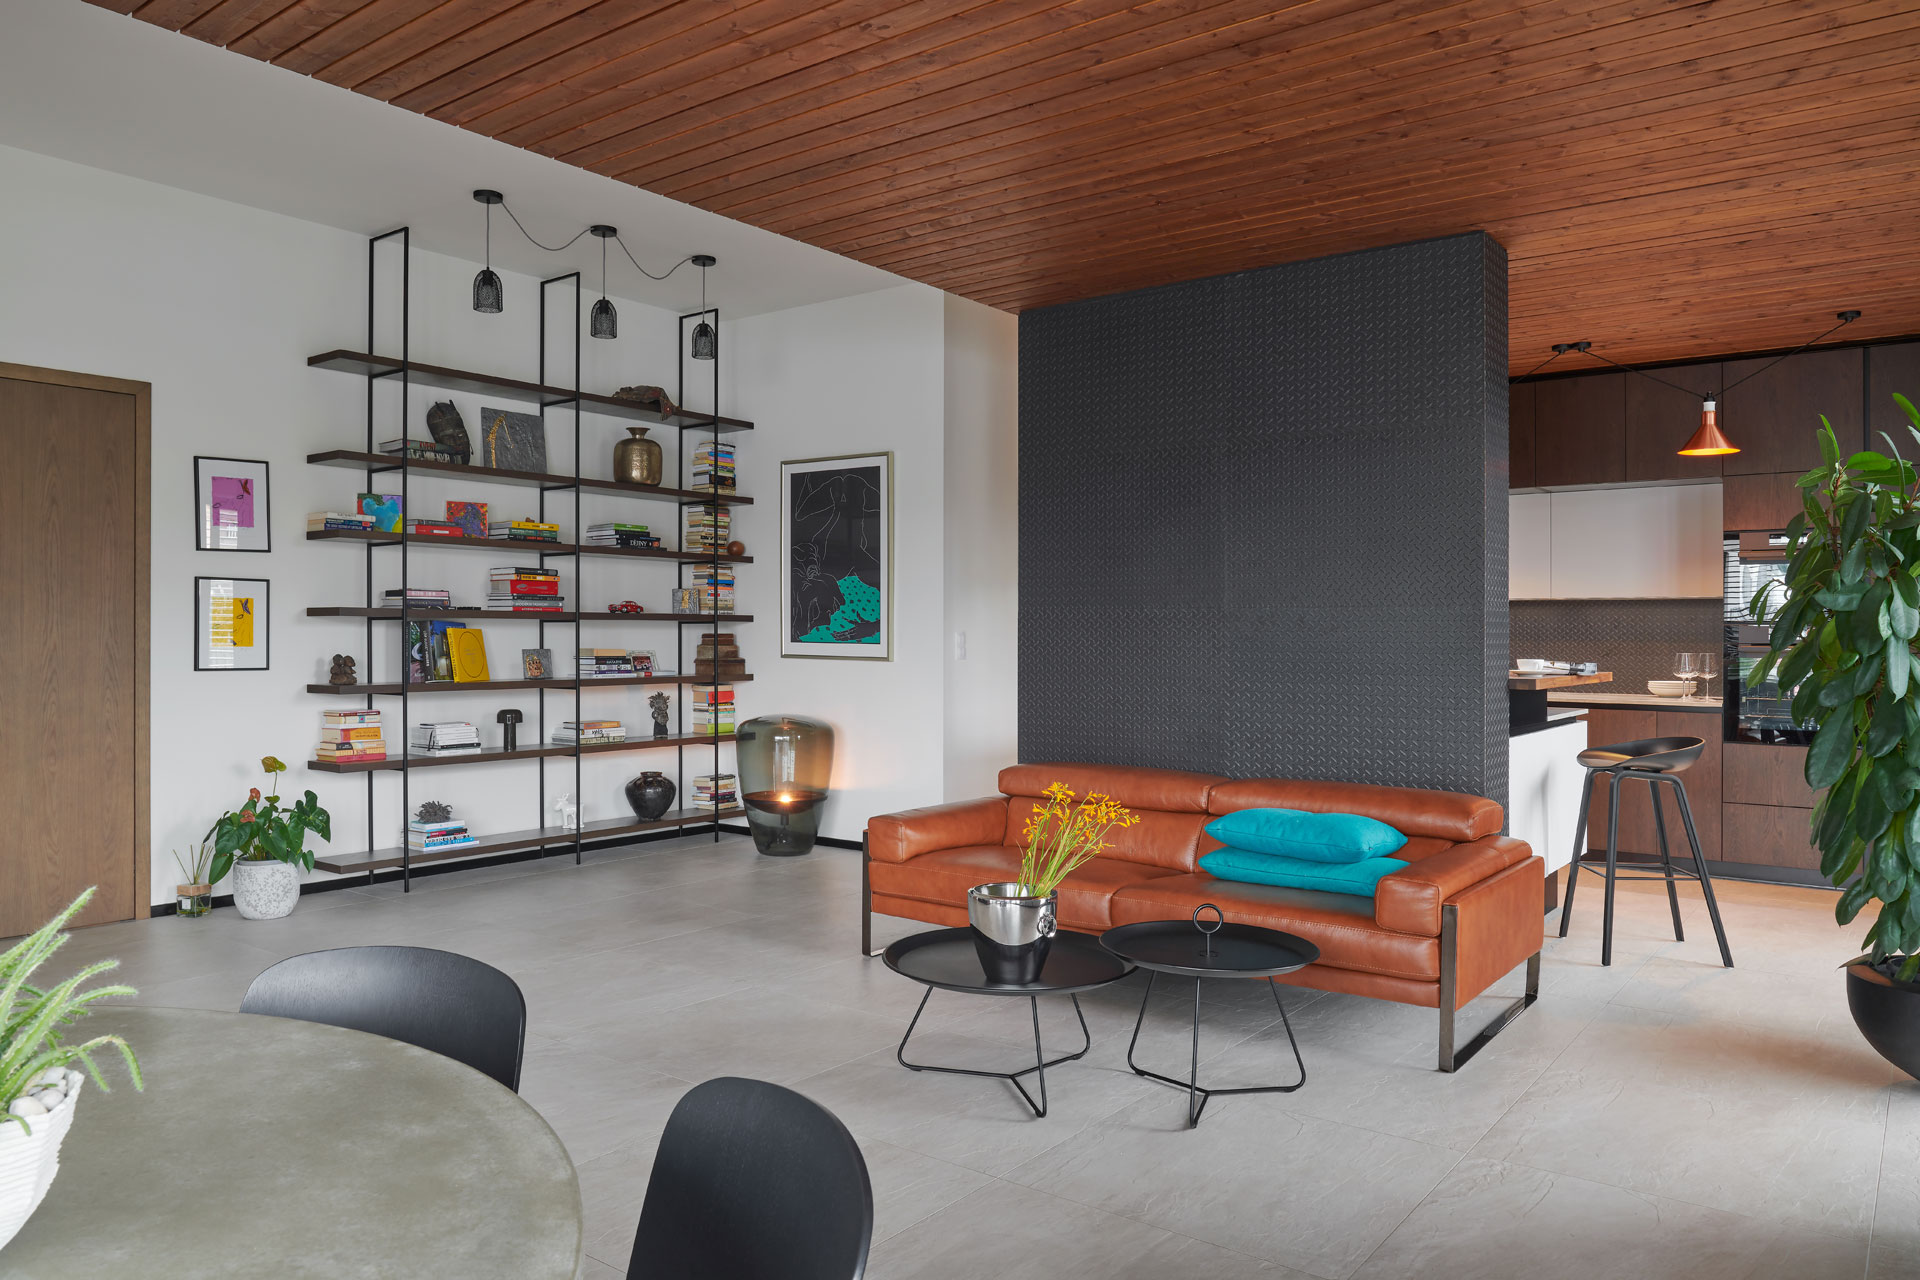 Hanák Furniture Realization of a customized interior